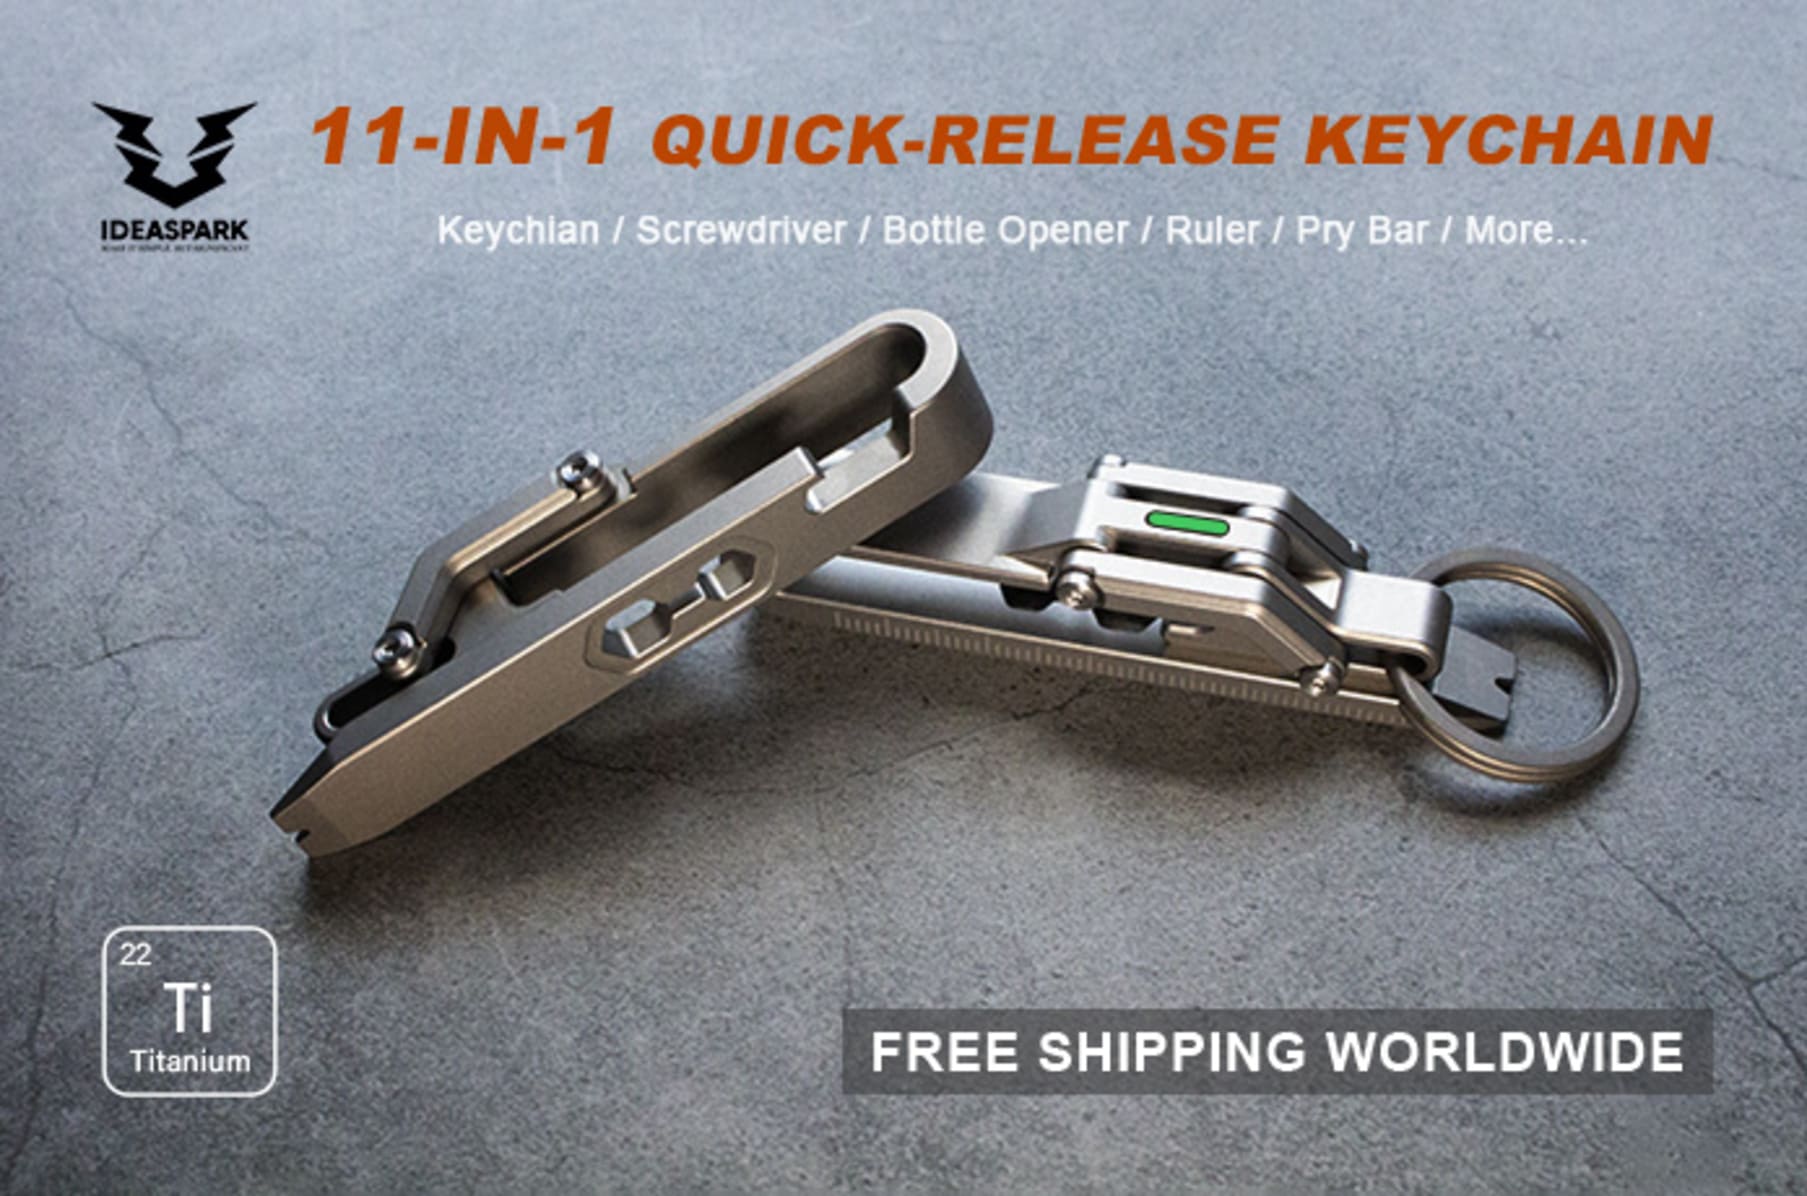 This Quick-Release Titanium Keychain Hides a Box Cutter Inside